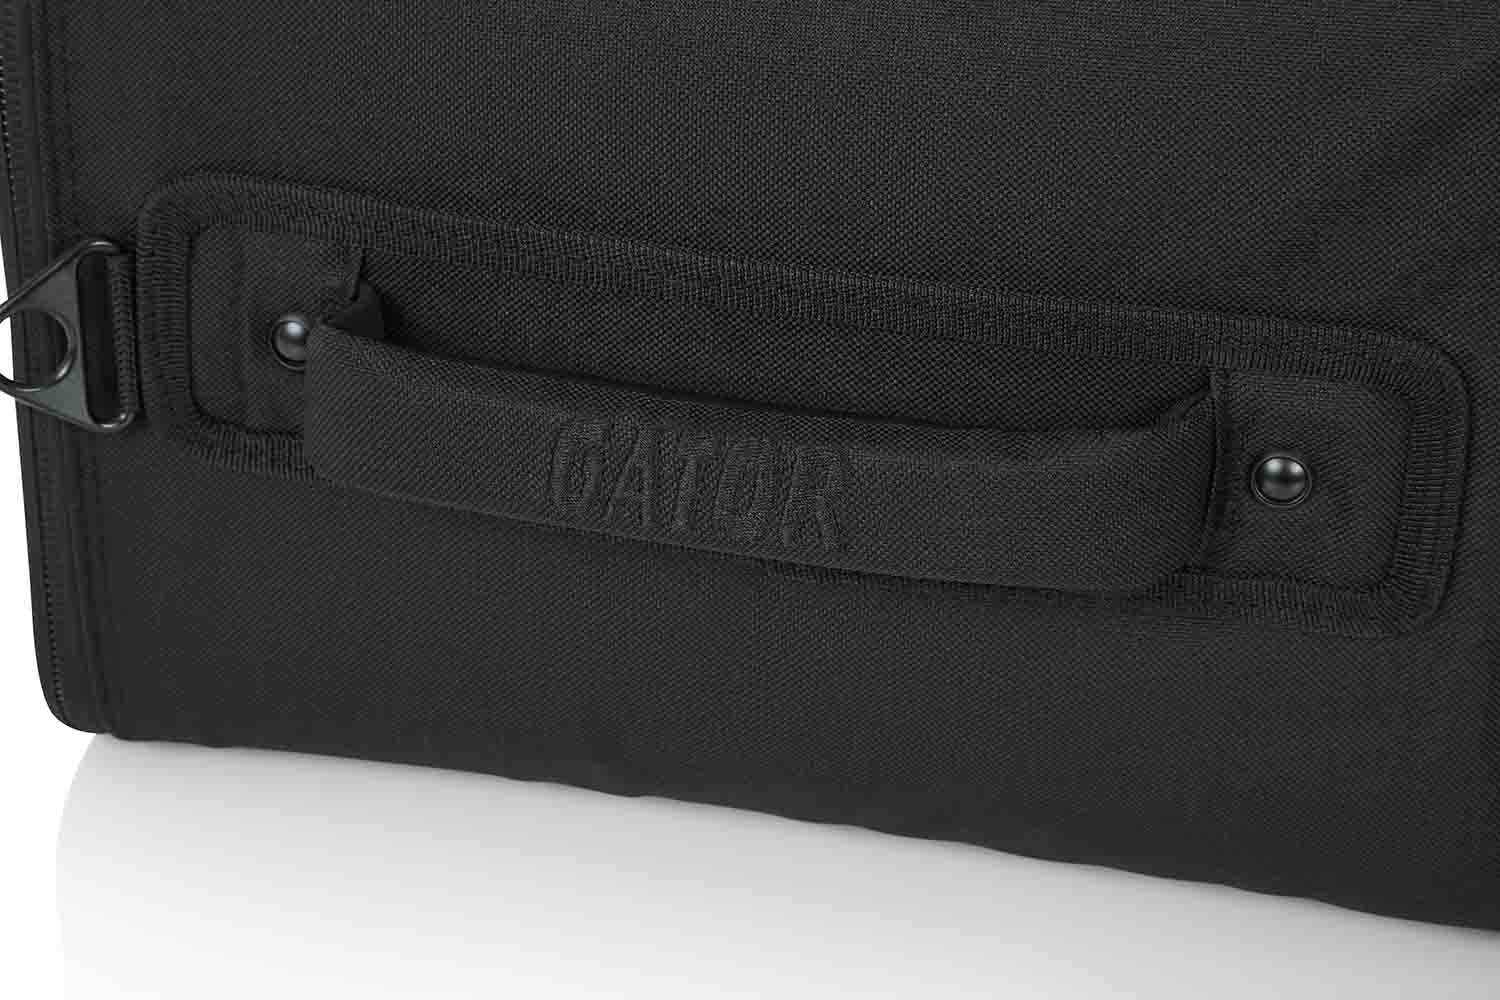 Gator Cases GR-RACKBAG-4U, 4U Lightweight Rack Bag with Aluminum Frame and PE Reinforcement - Hollywood DJ